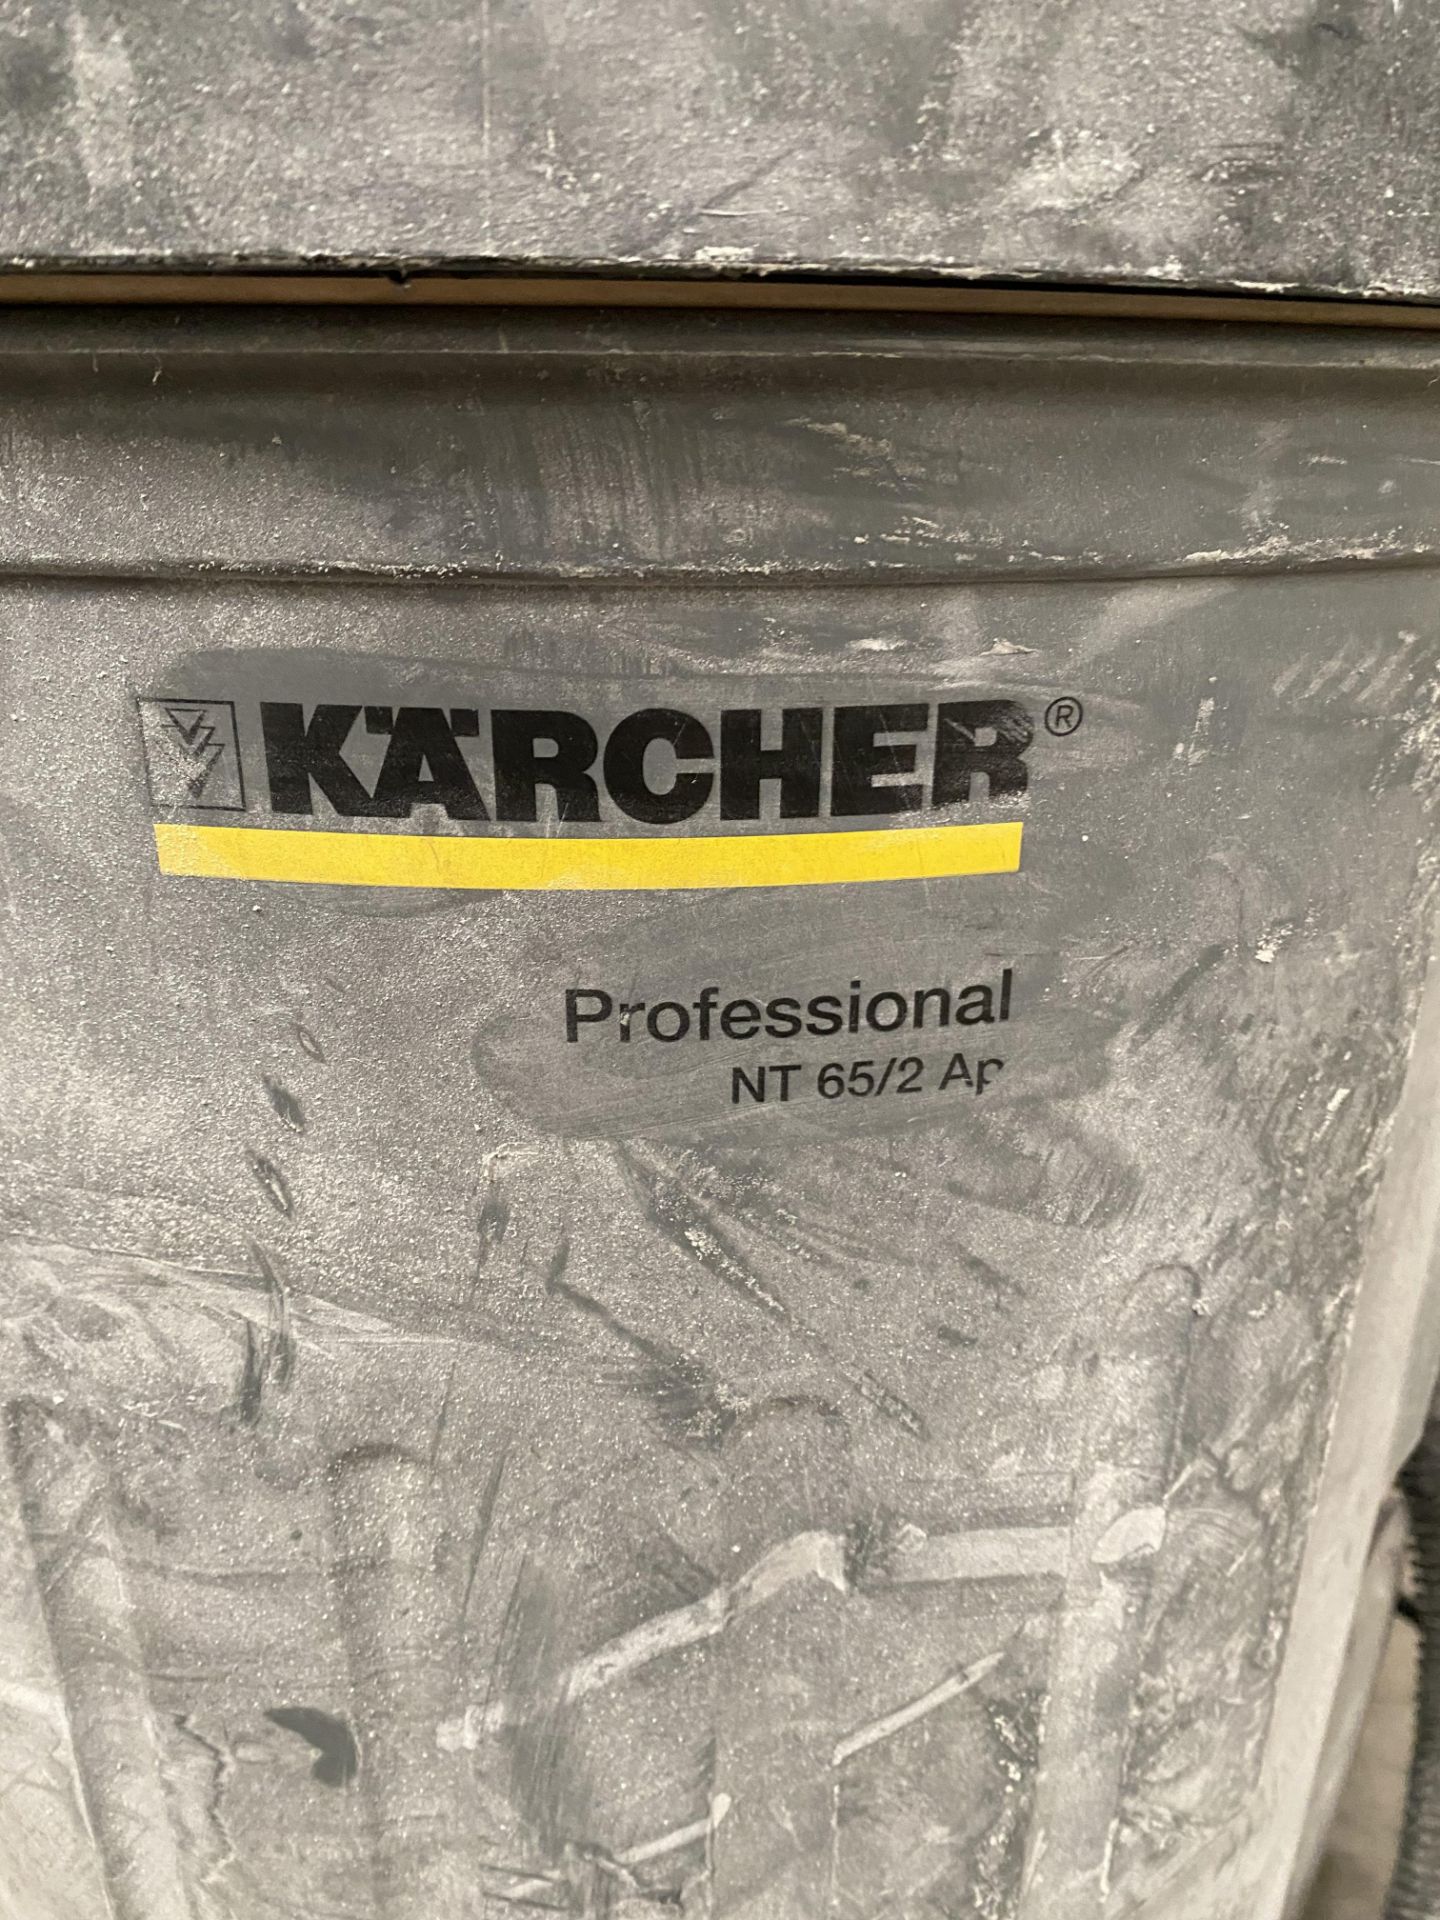 Karcher Professional vacuum, NT65/2 AP - Bild 2 aus 5